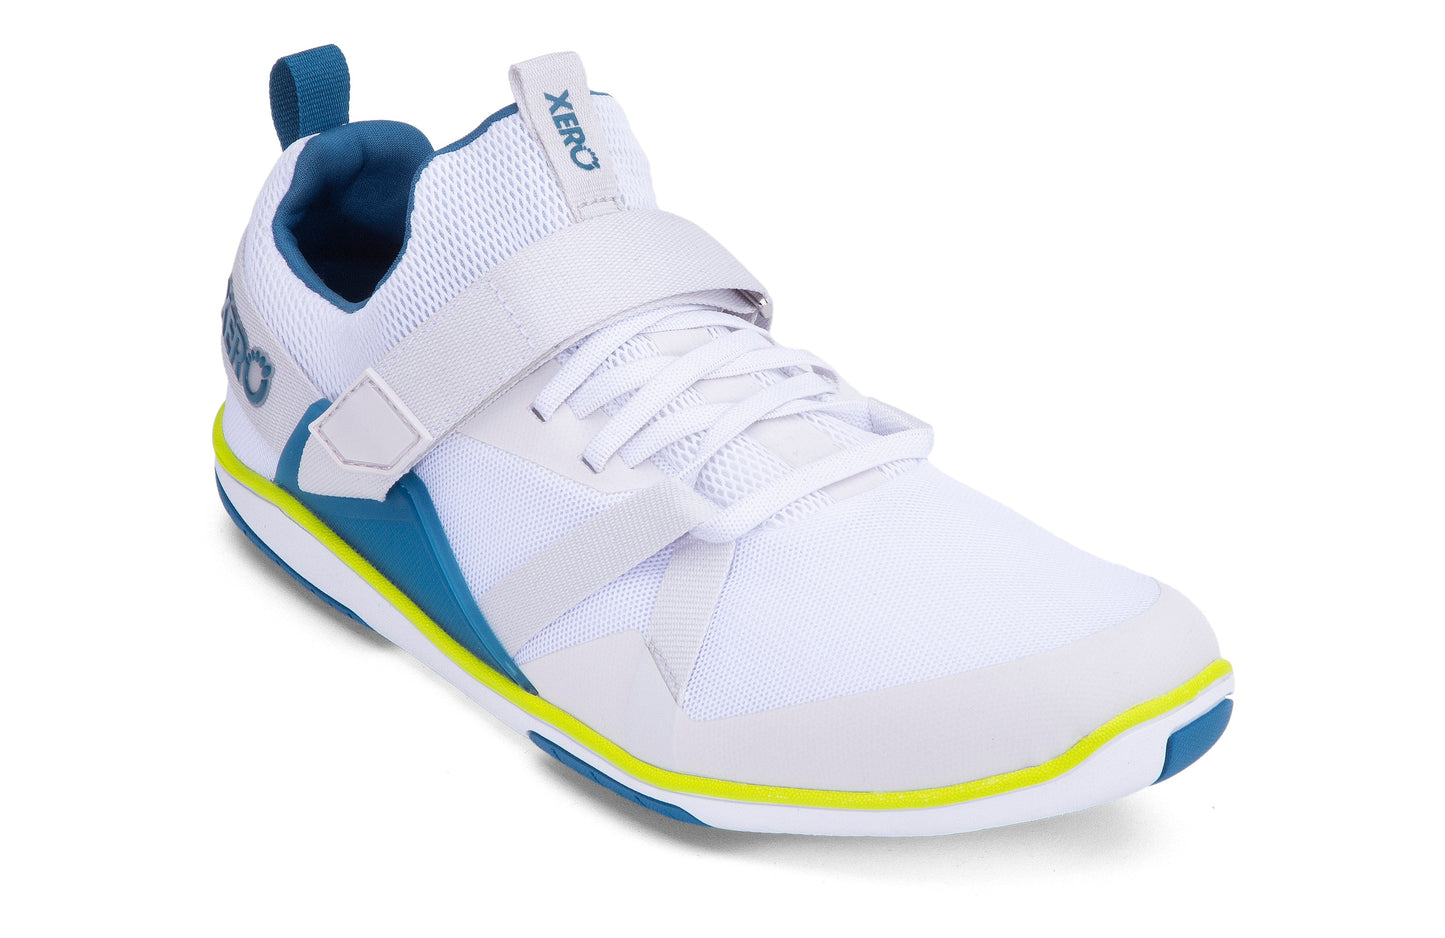 Xero Shoes Forza Trainer Mens barfods træningssko til mænd i farven white / blue sapphire, vinklet